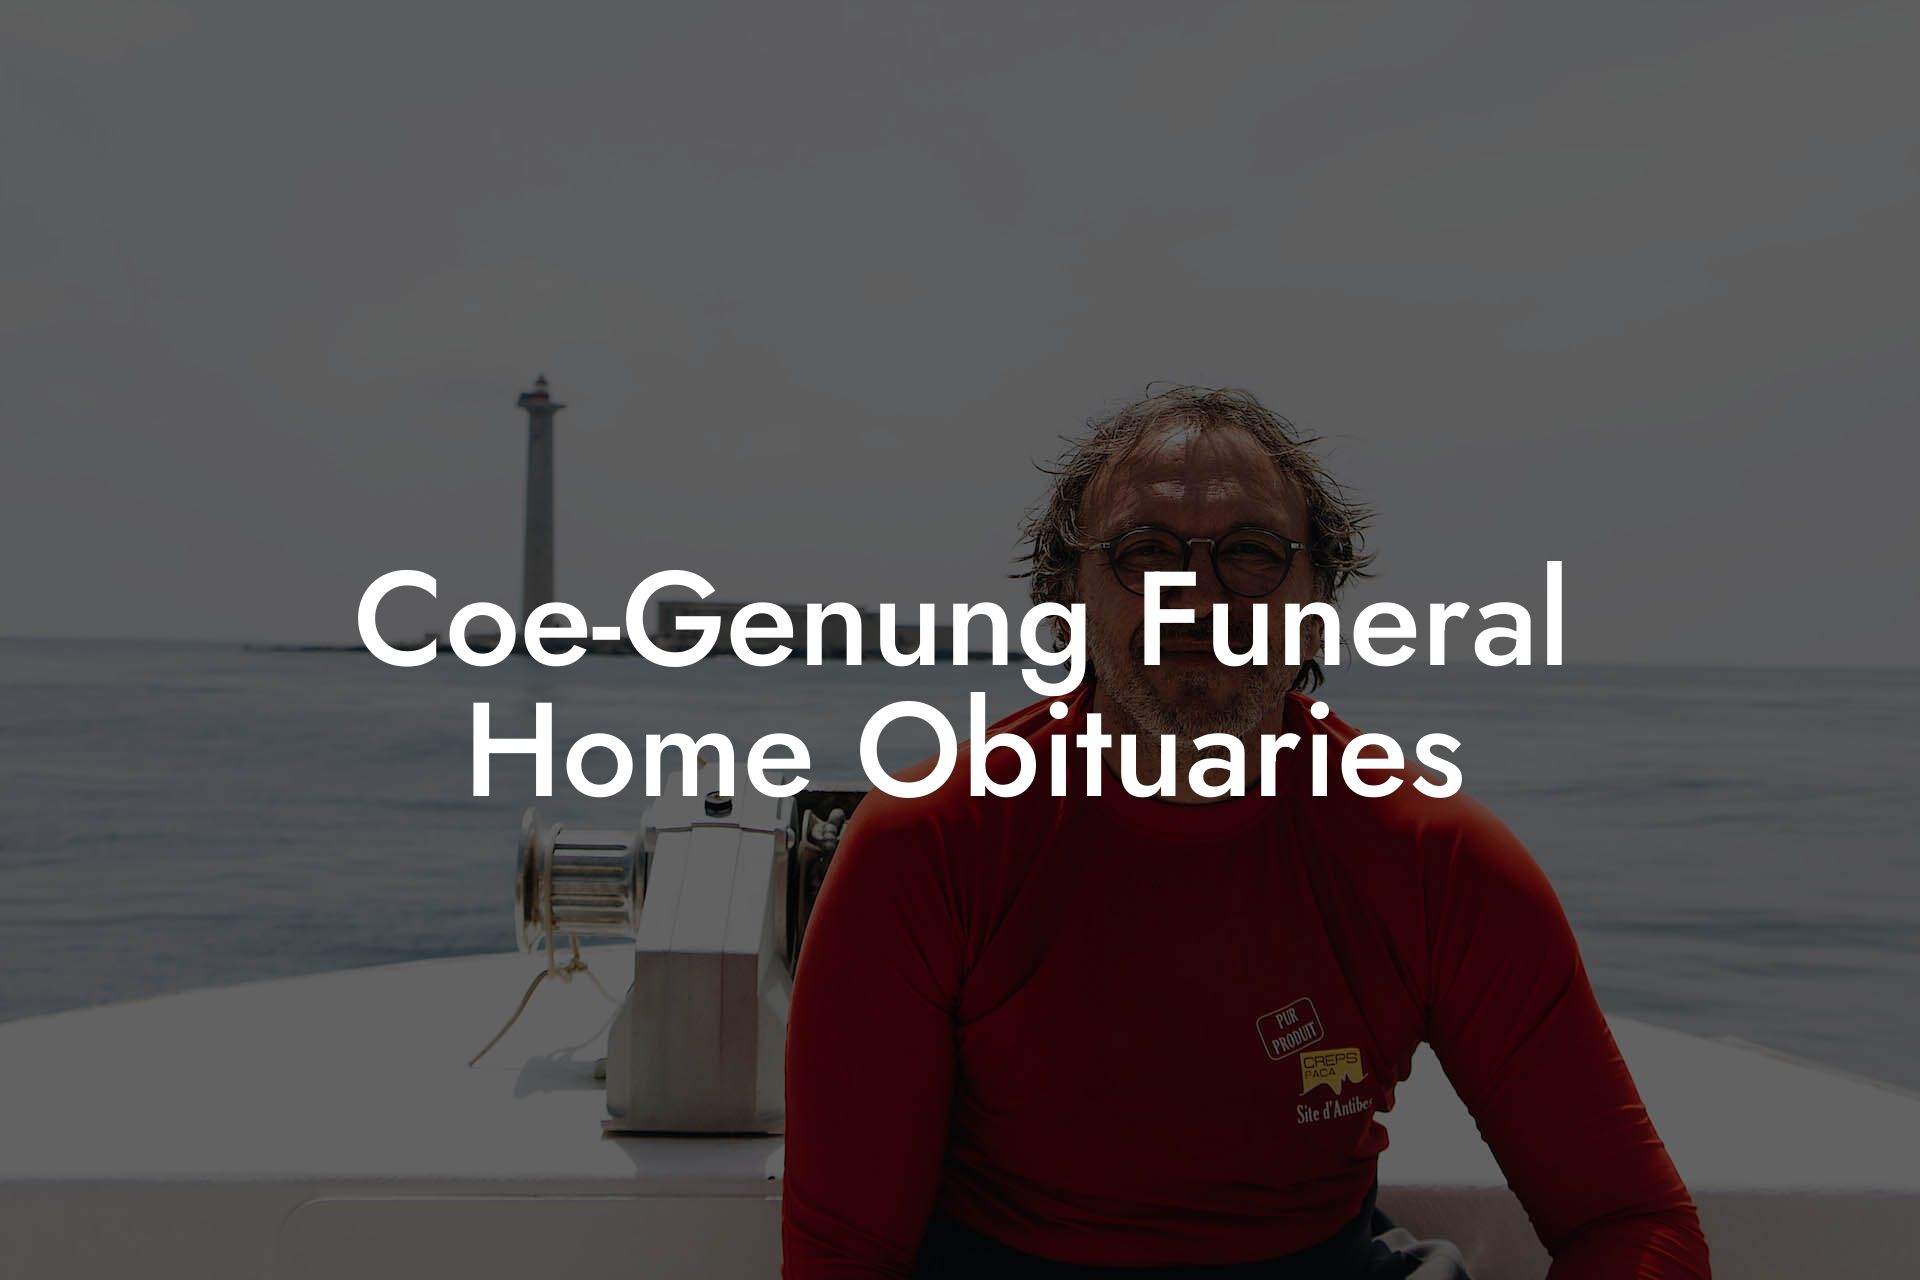 Coe-Genung Funeral Home Obituaries